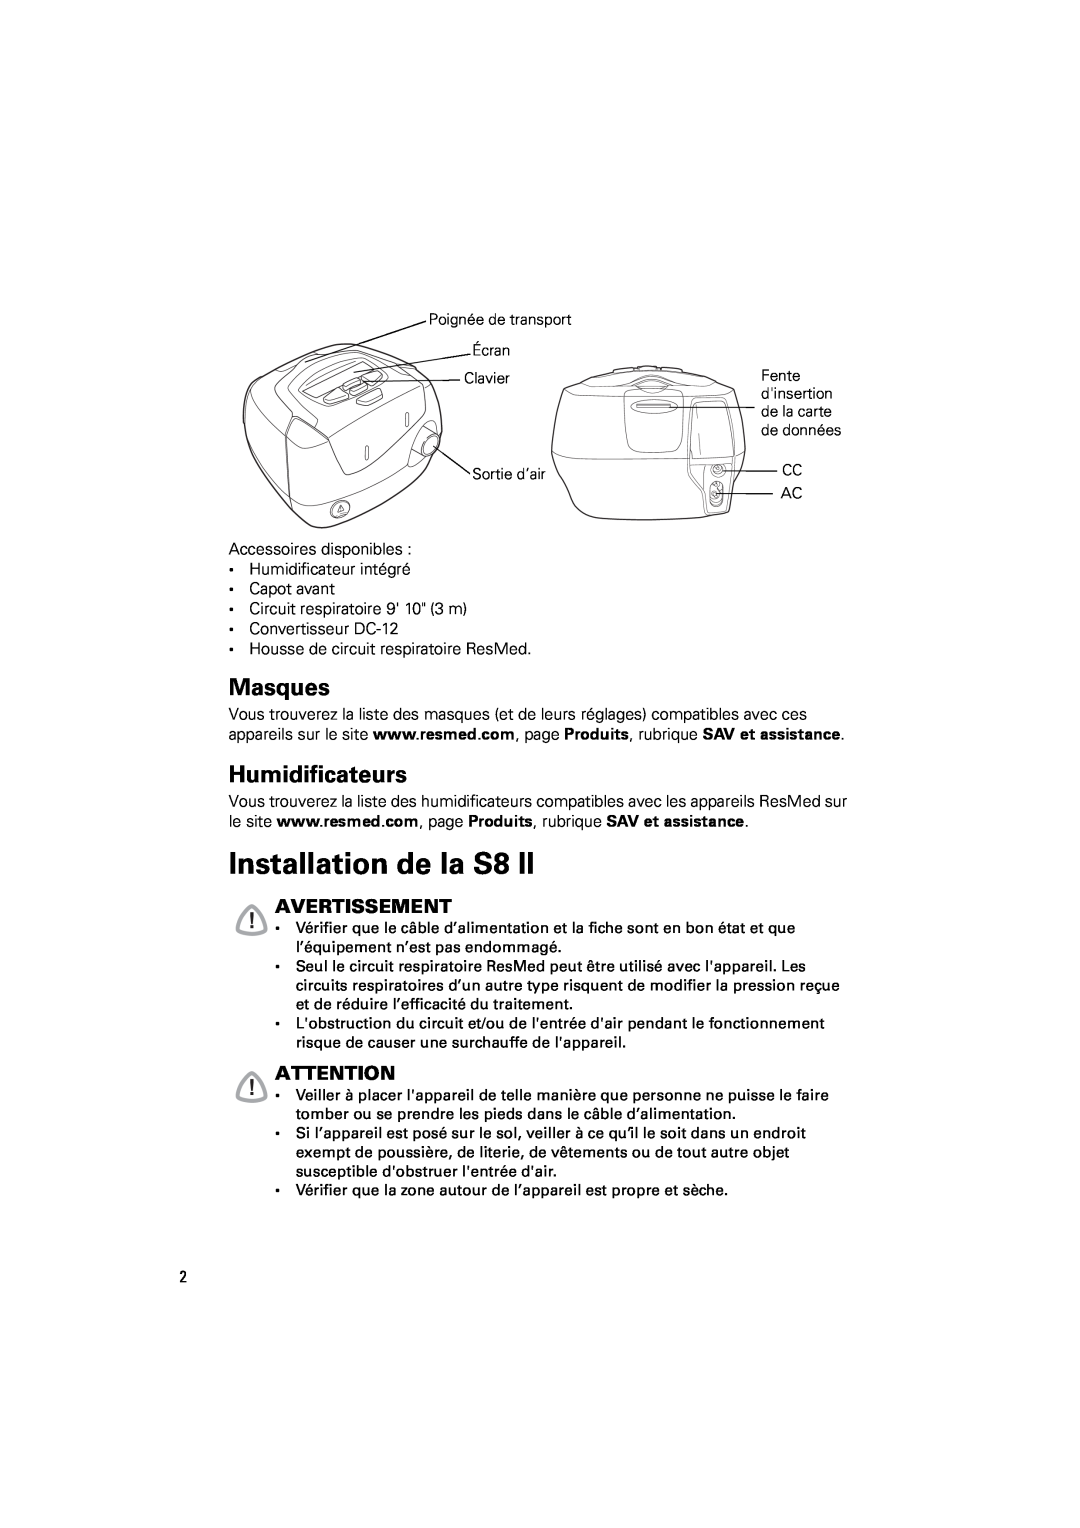 ResMed s8 manual Installation de la S8, Masques, Humidificateurs, Avertissement 